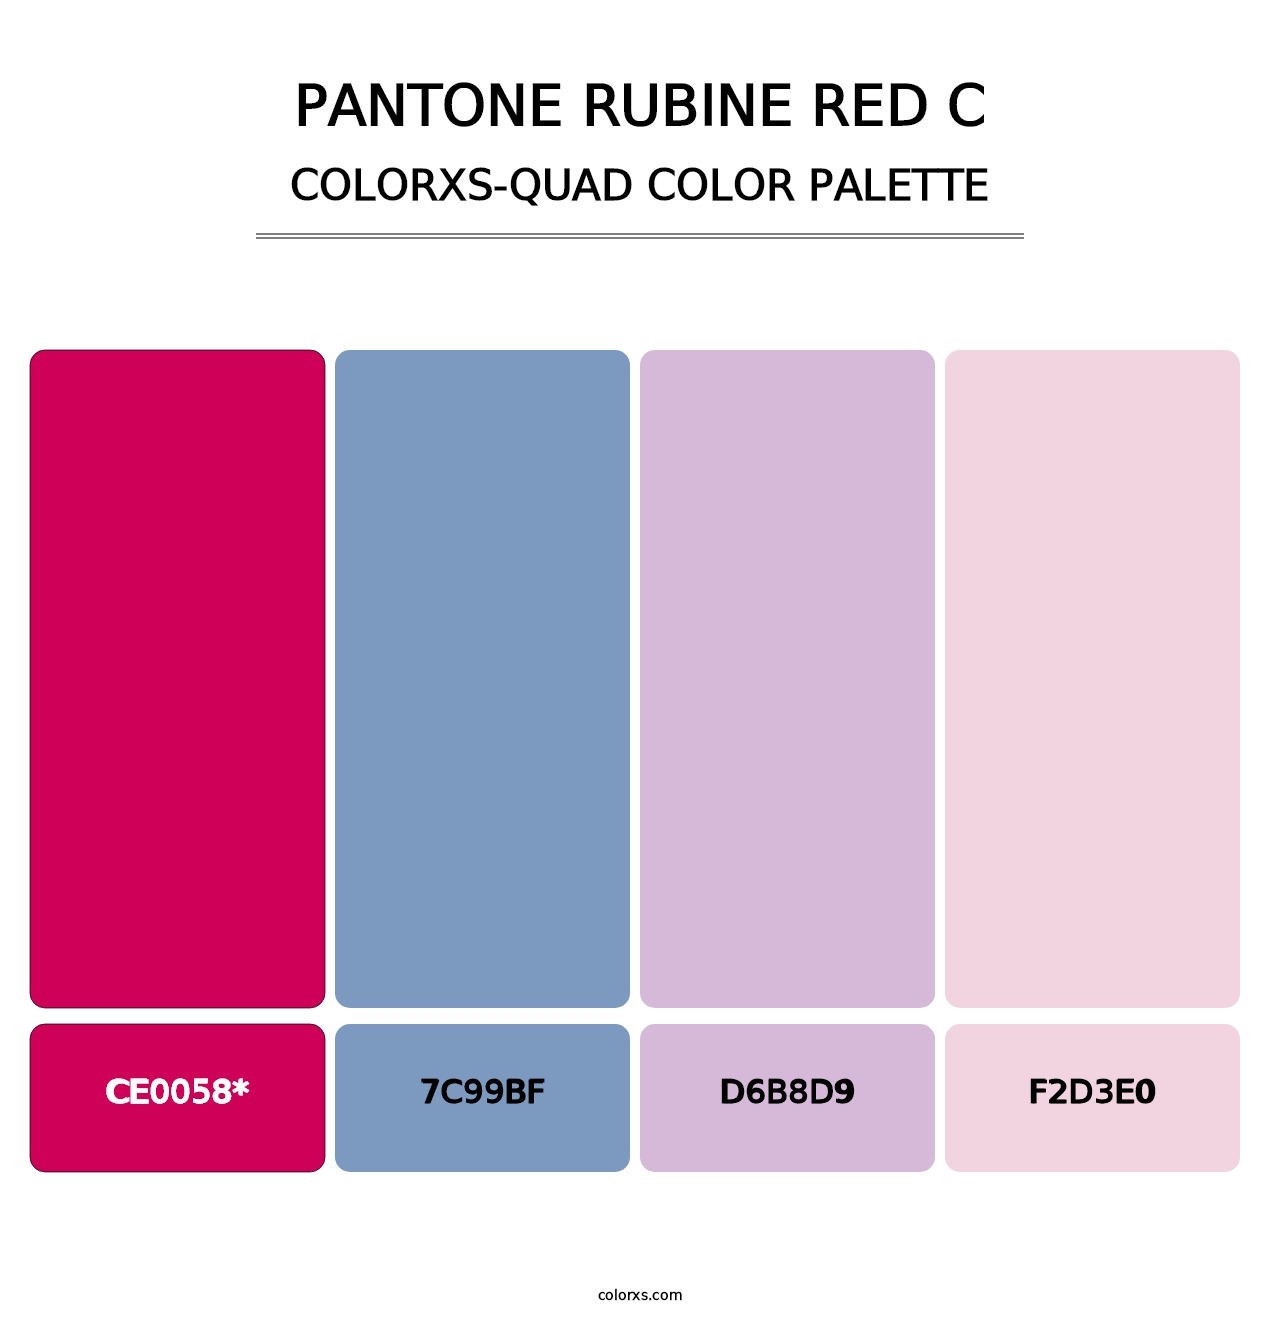 PANTONE Rubine Red C - Colorxs Quad Palette